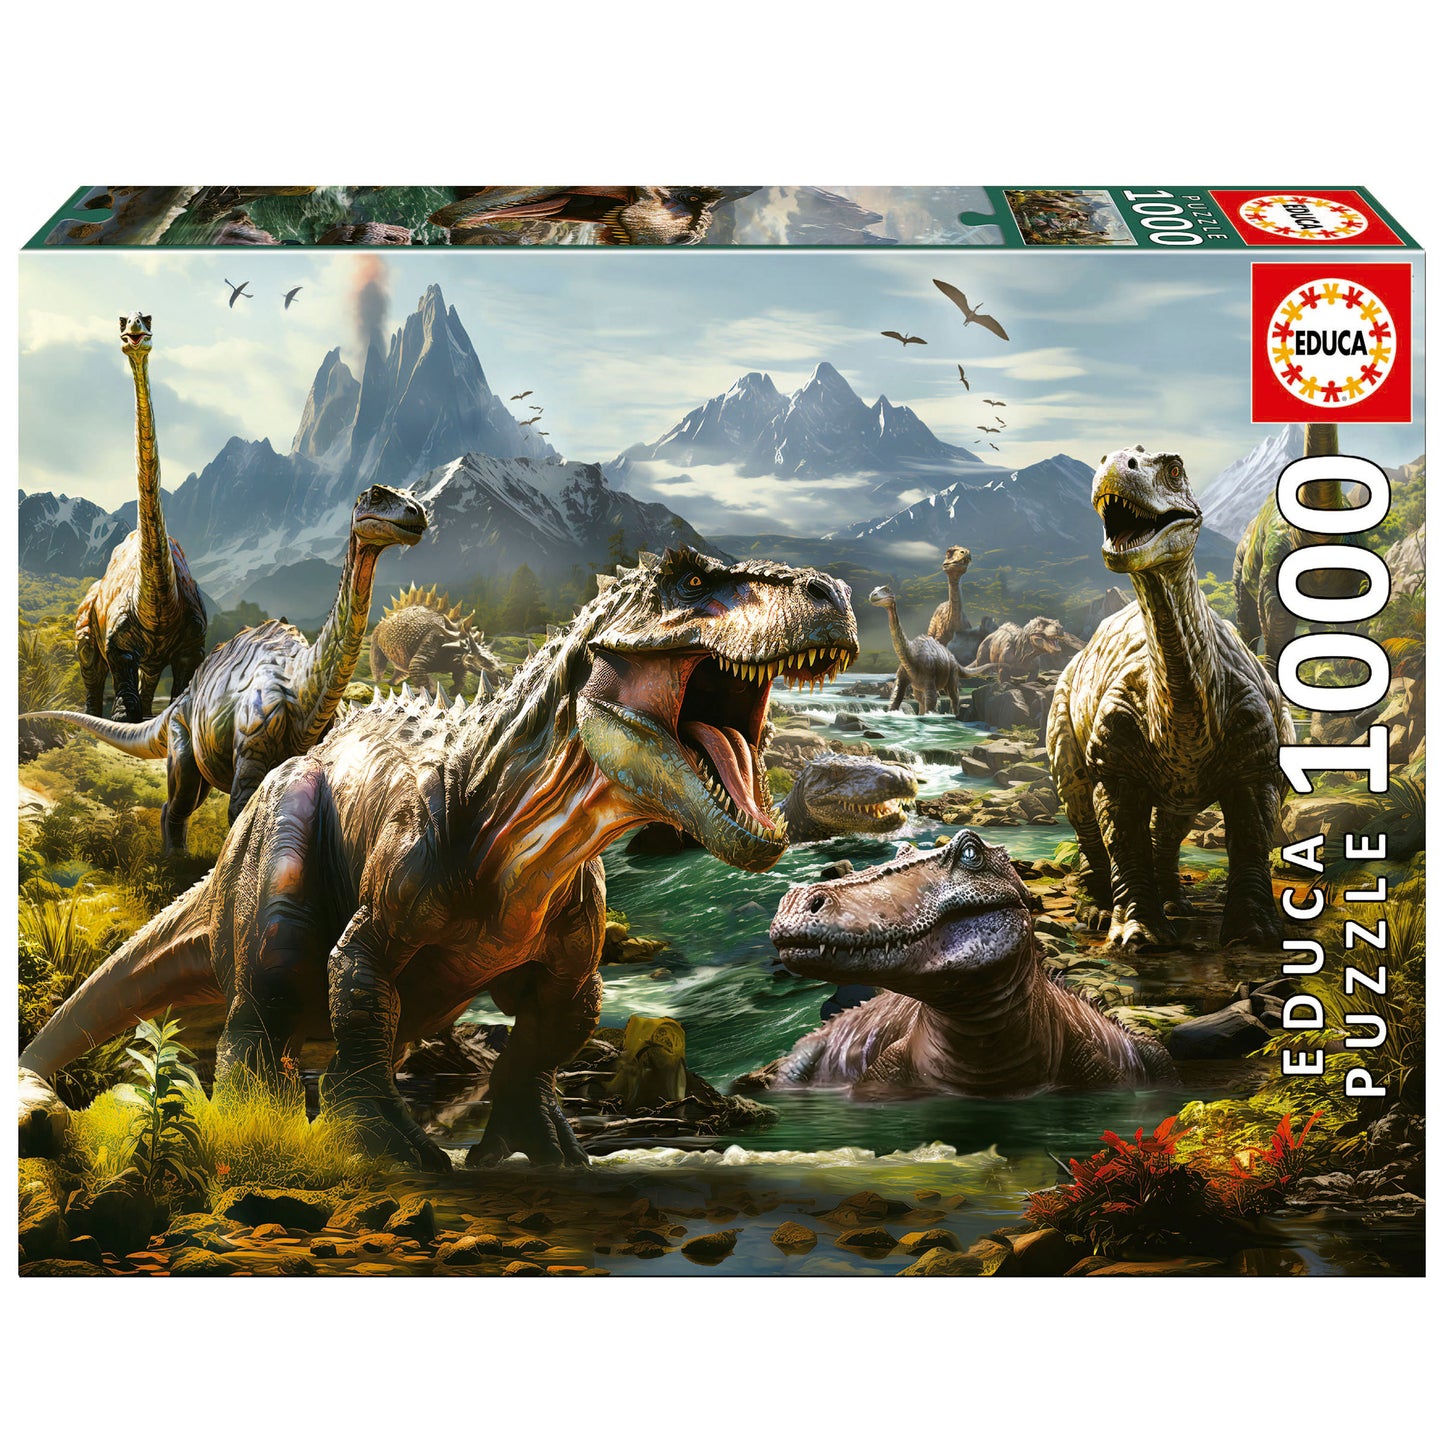 Fierce Dinosaurs by Michele Farella, 1000 Piece Puzzle